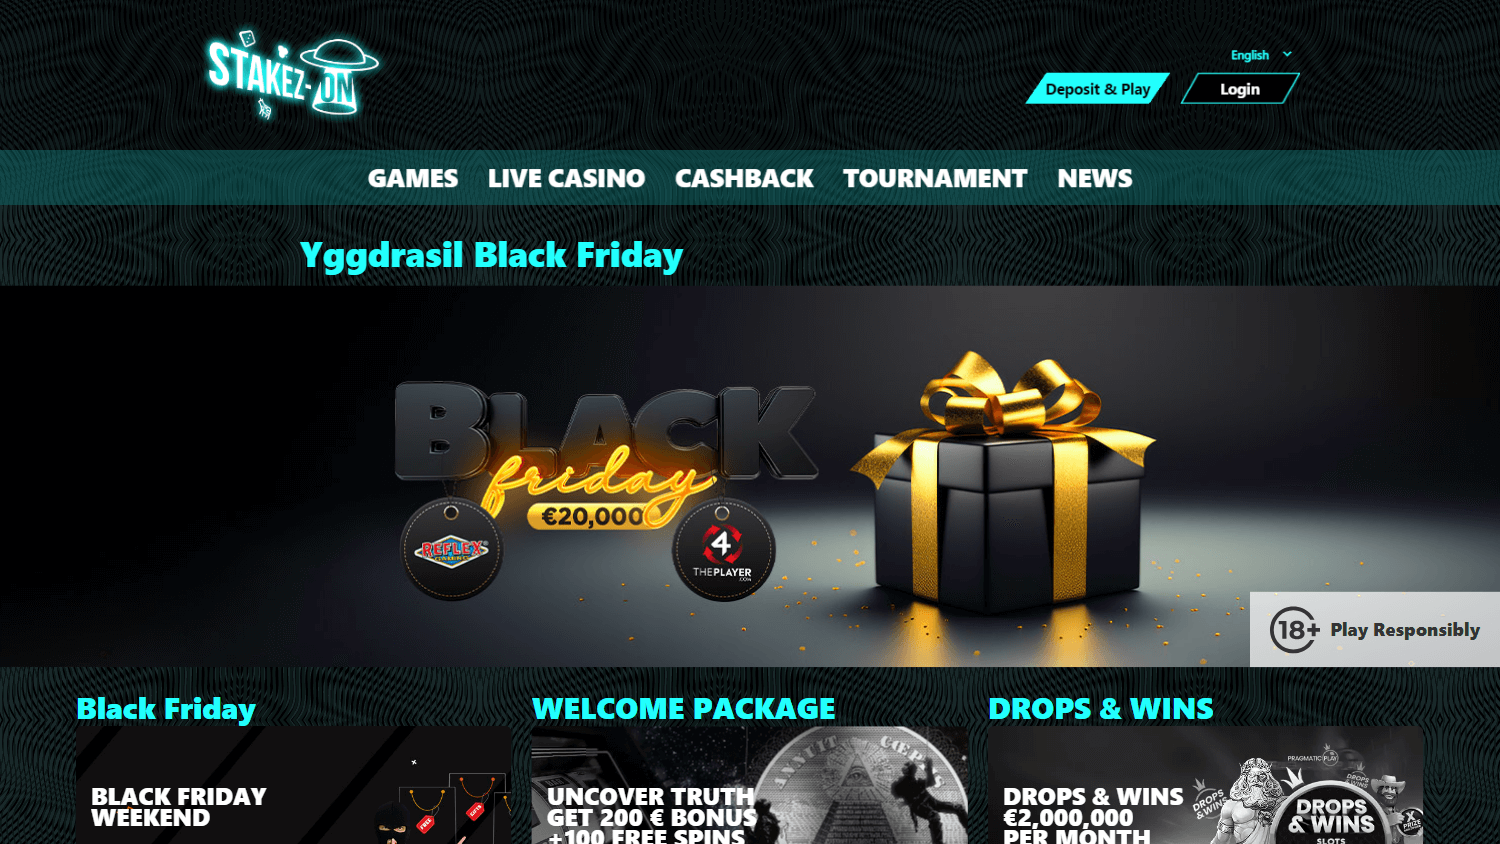 stakezon_casino_promotions_desktop